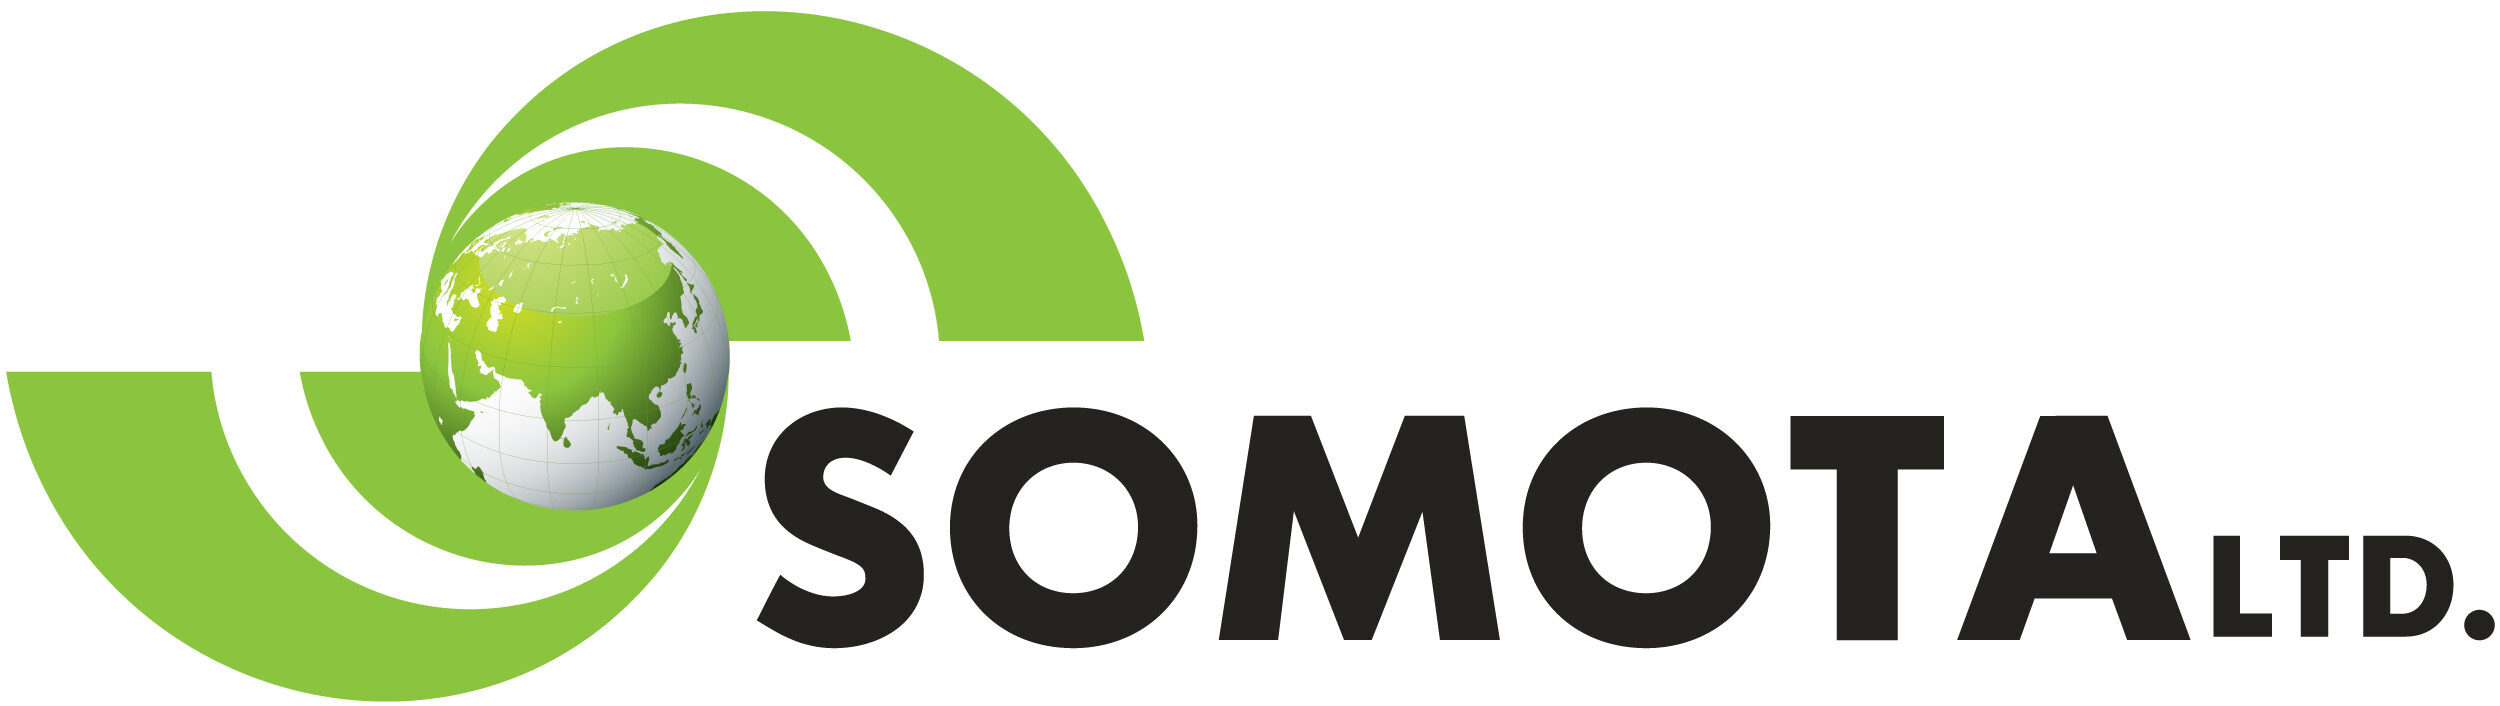 Somota Global